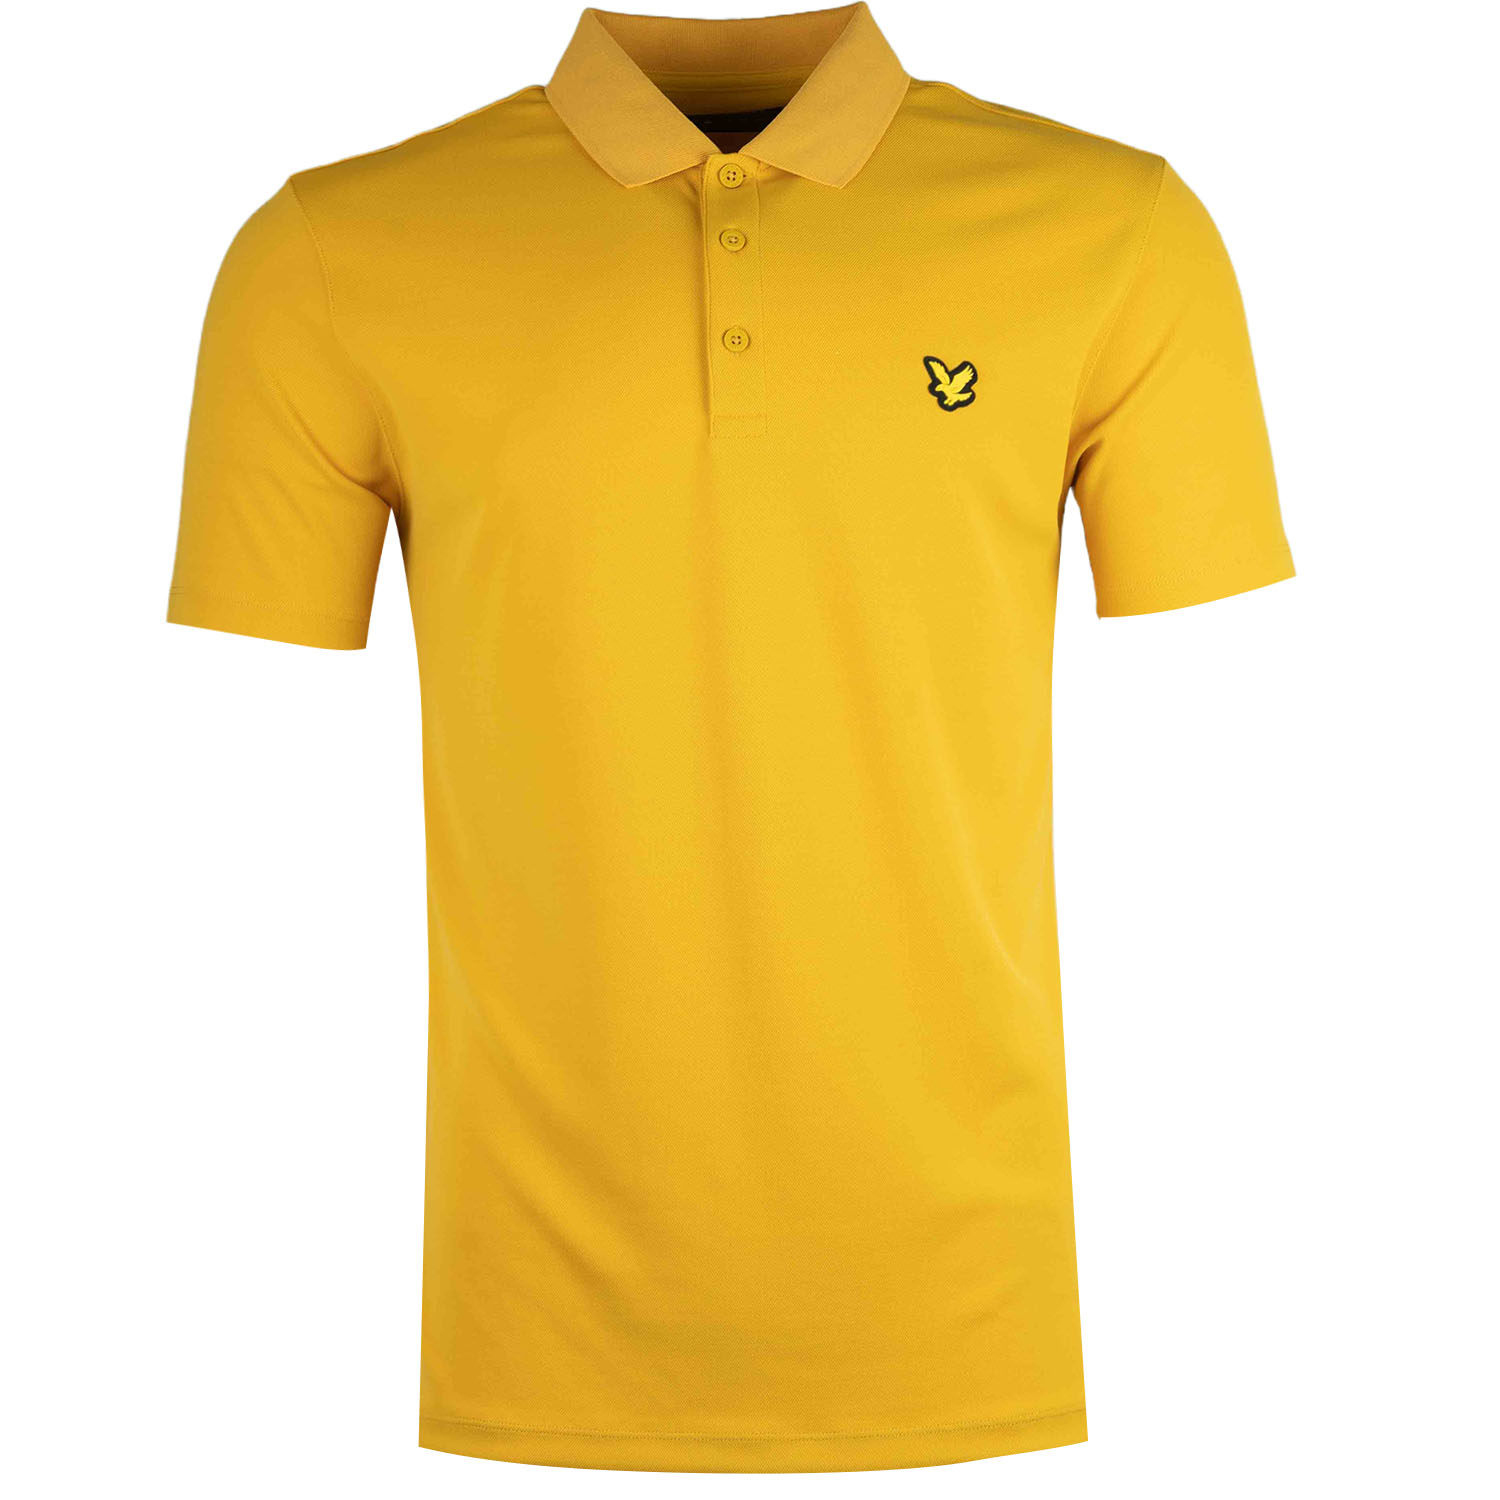 Lyle & Scott Golf Tech Polo Shirt